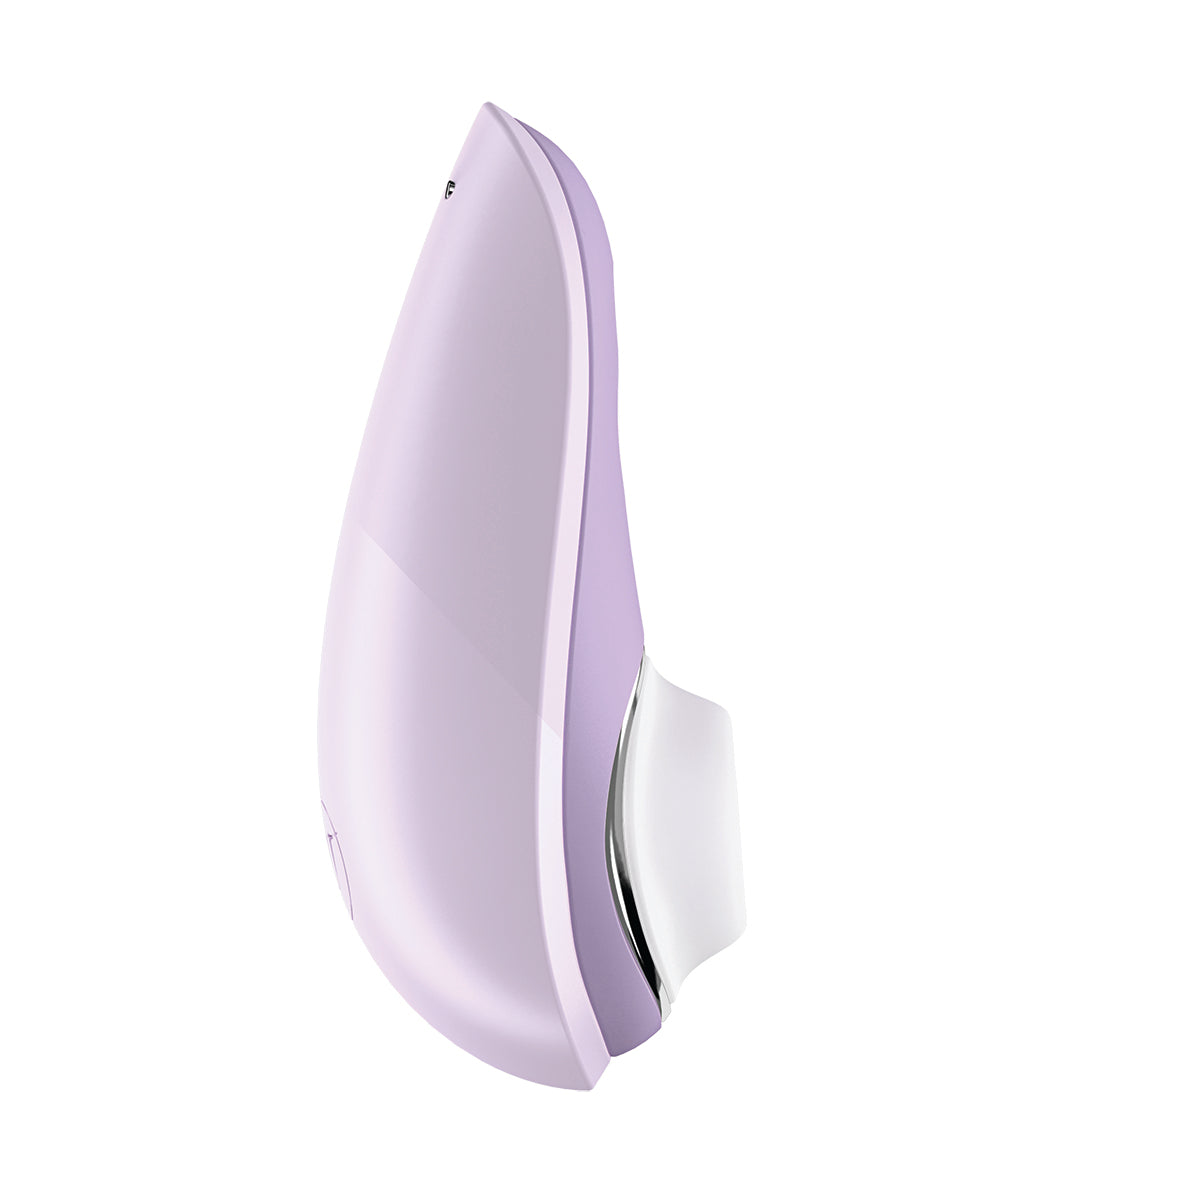 Womanizer Intimacy Devices Womanizer Liberty - Lilac